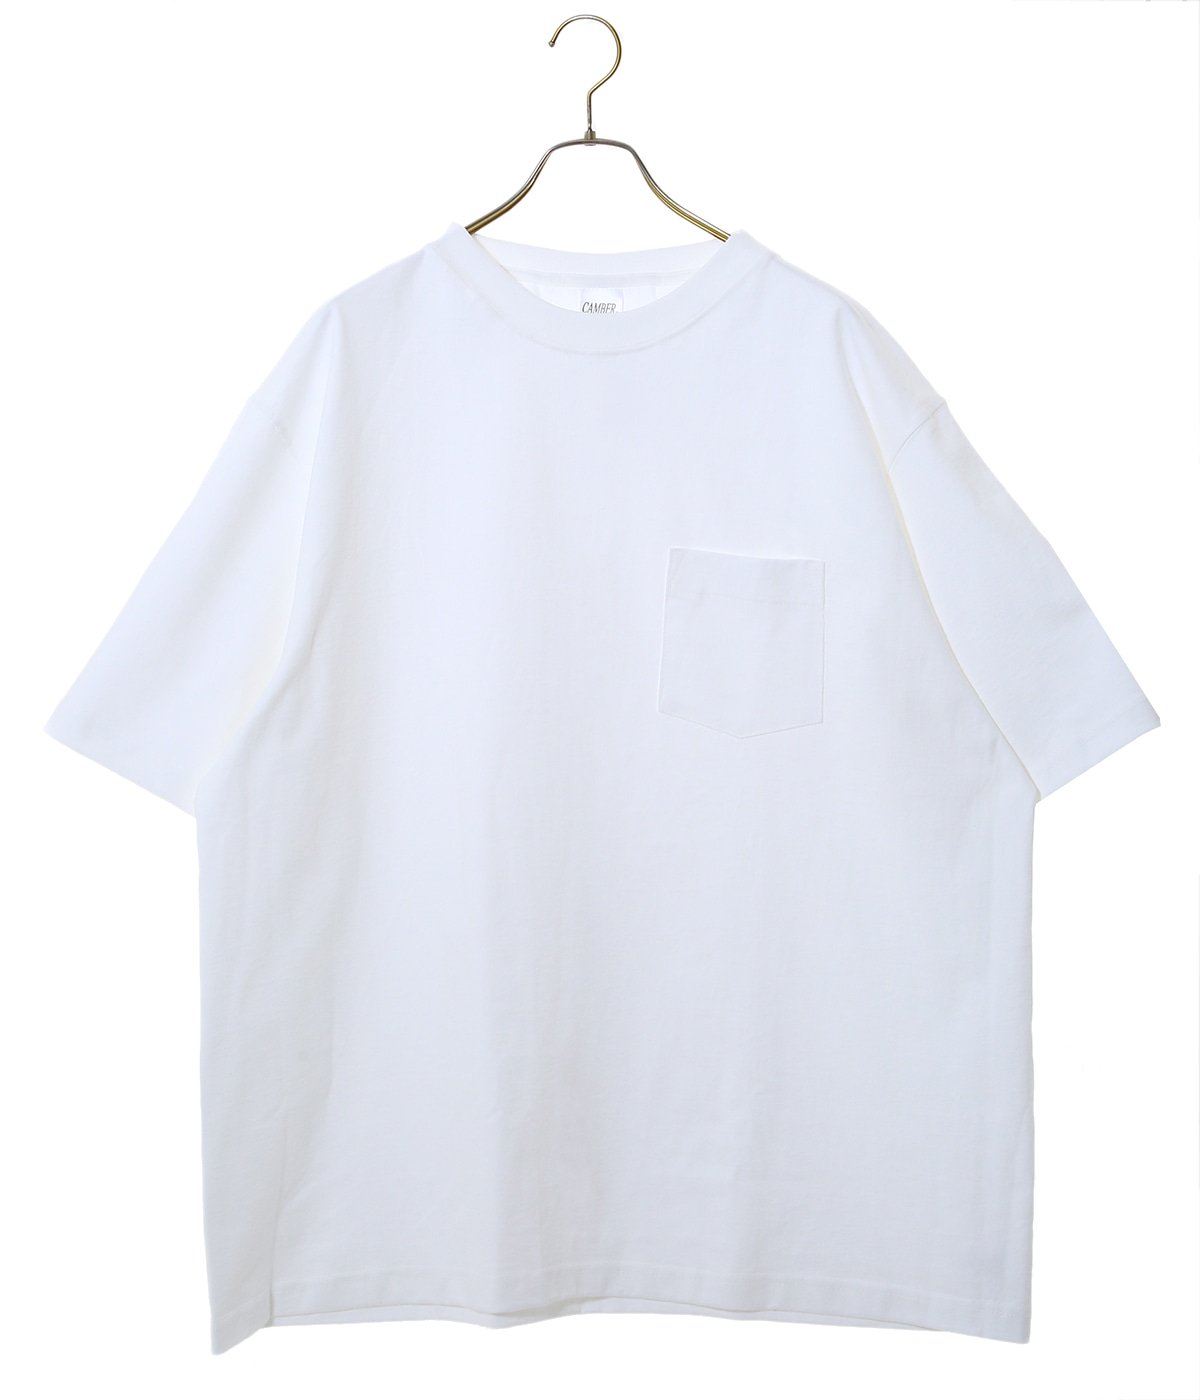 CAMBER アメリカ製 8oz半袖 Tシャツ XL ブラウン 新品タグ付